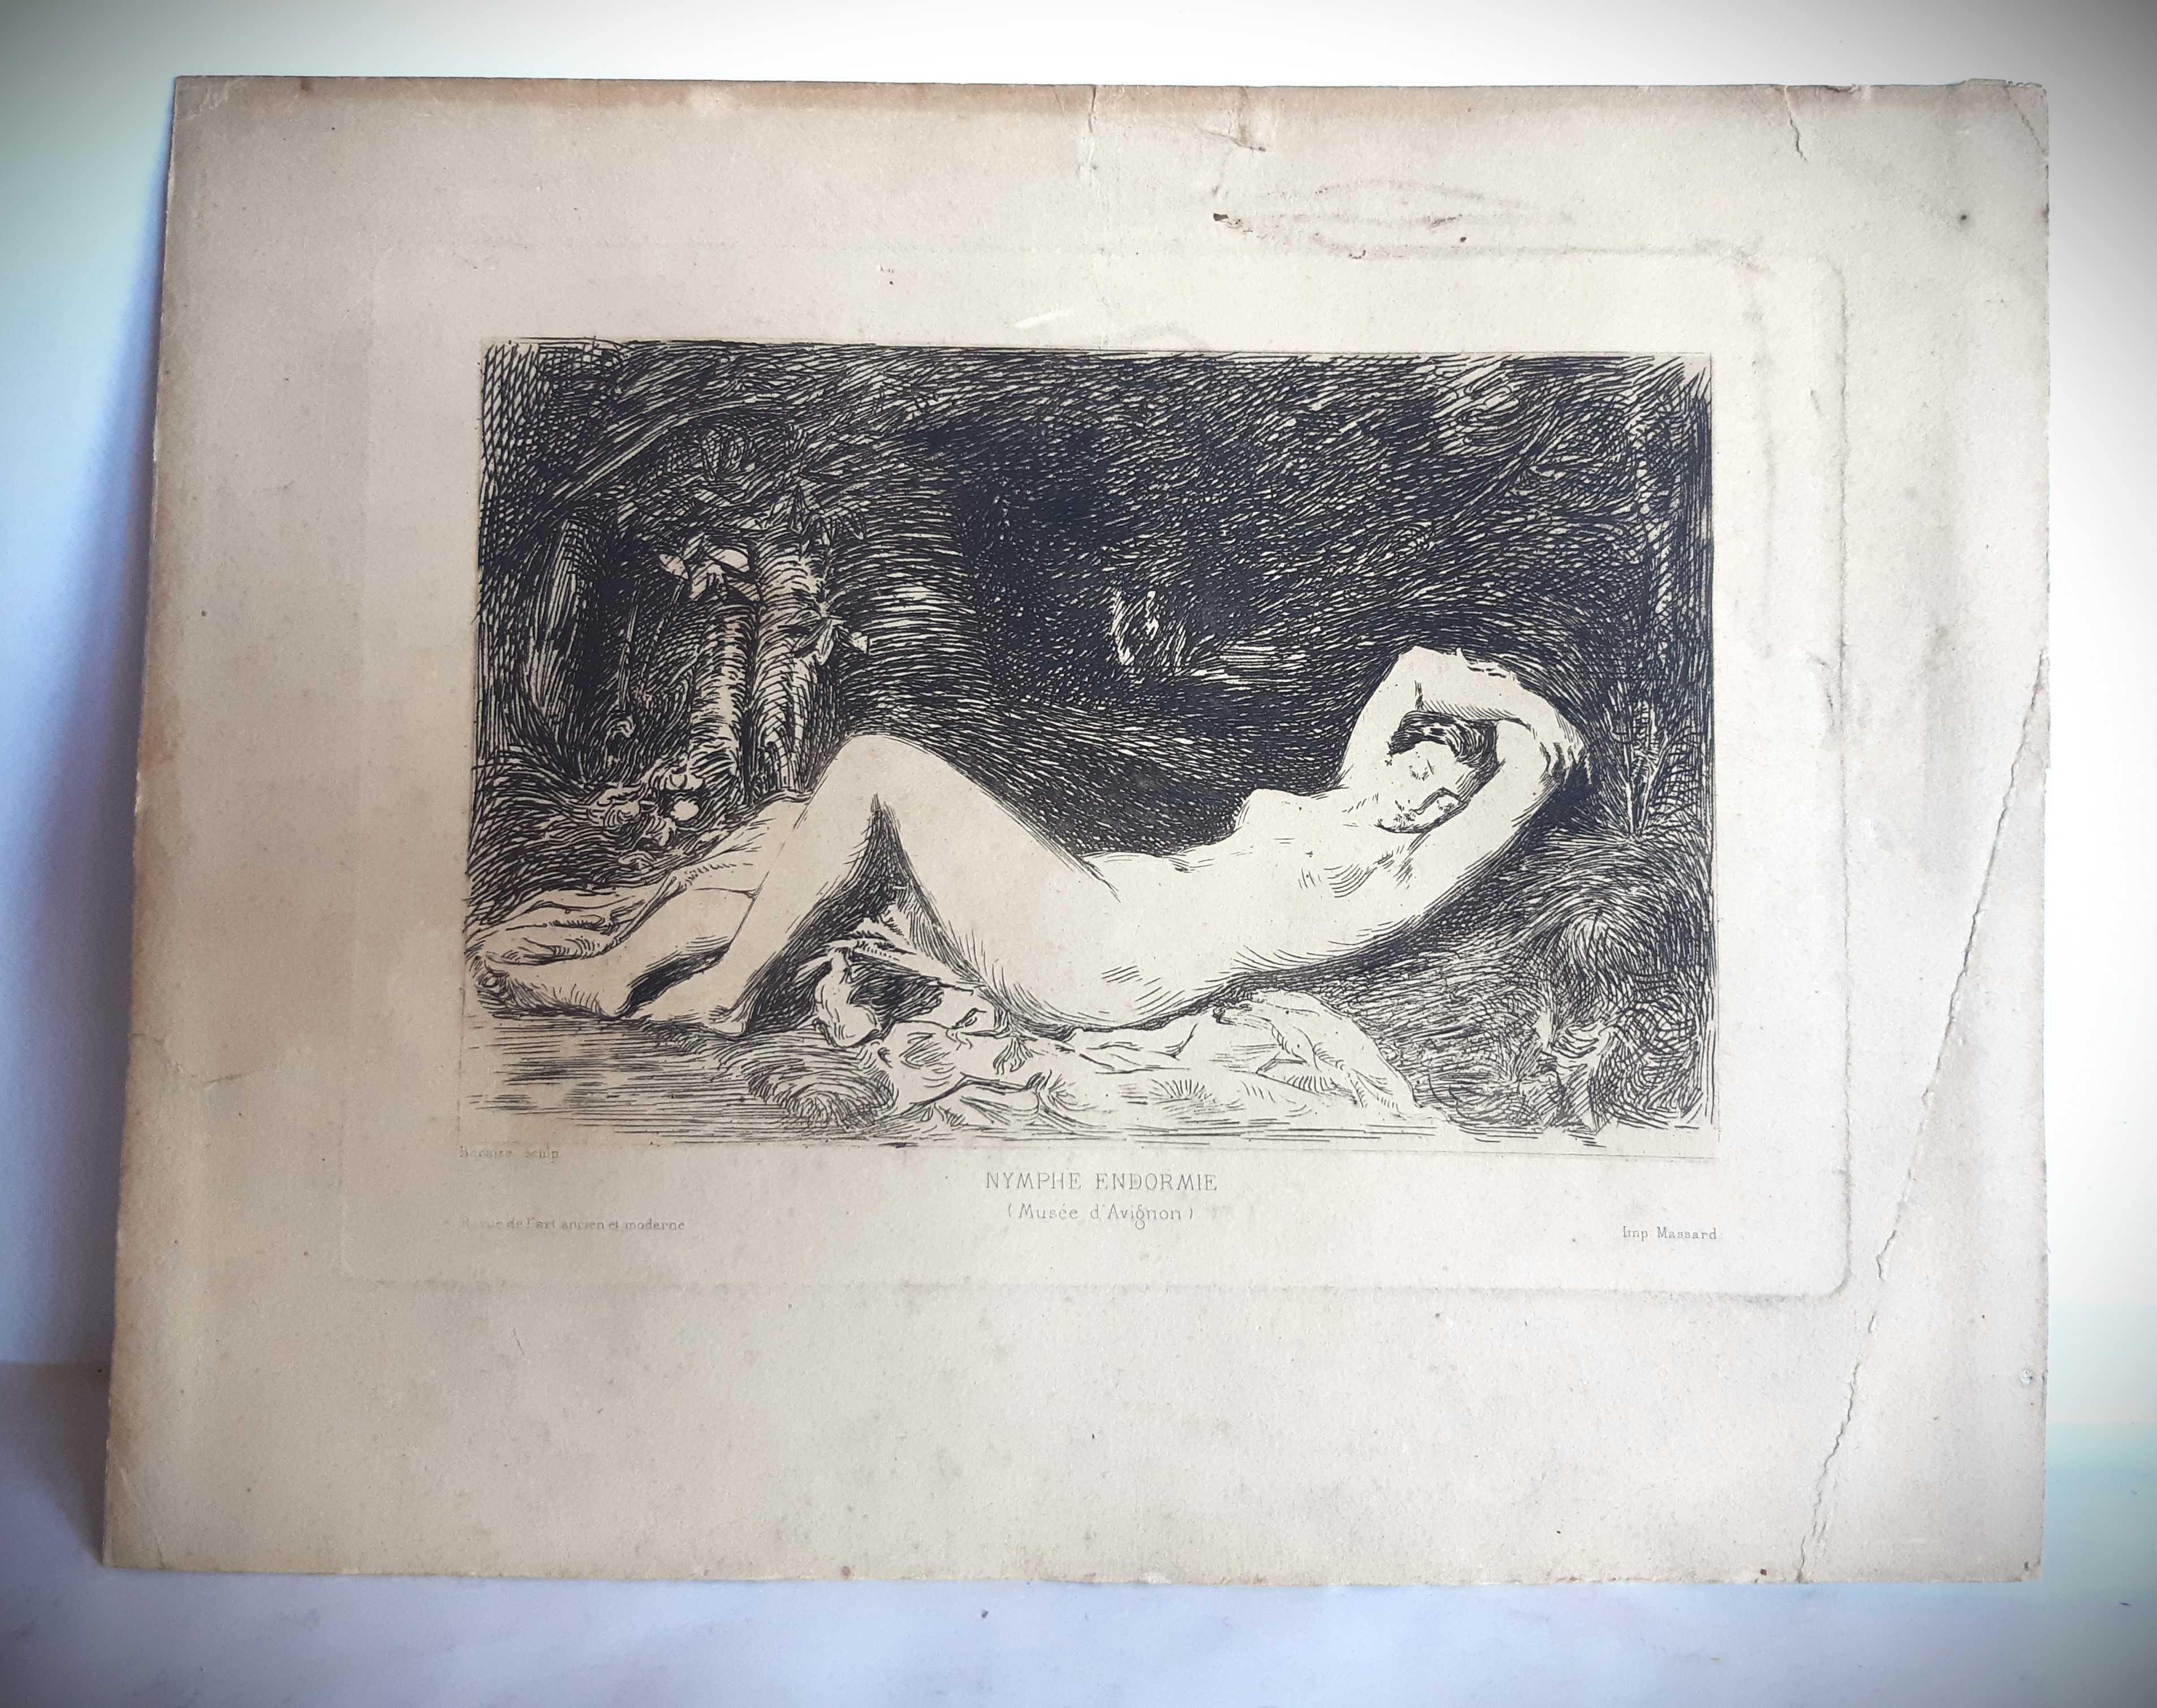 Baraize, dupa Chasseriau - Nymphe endormie. Acquaforte, 1898